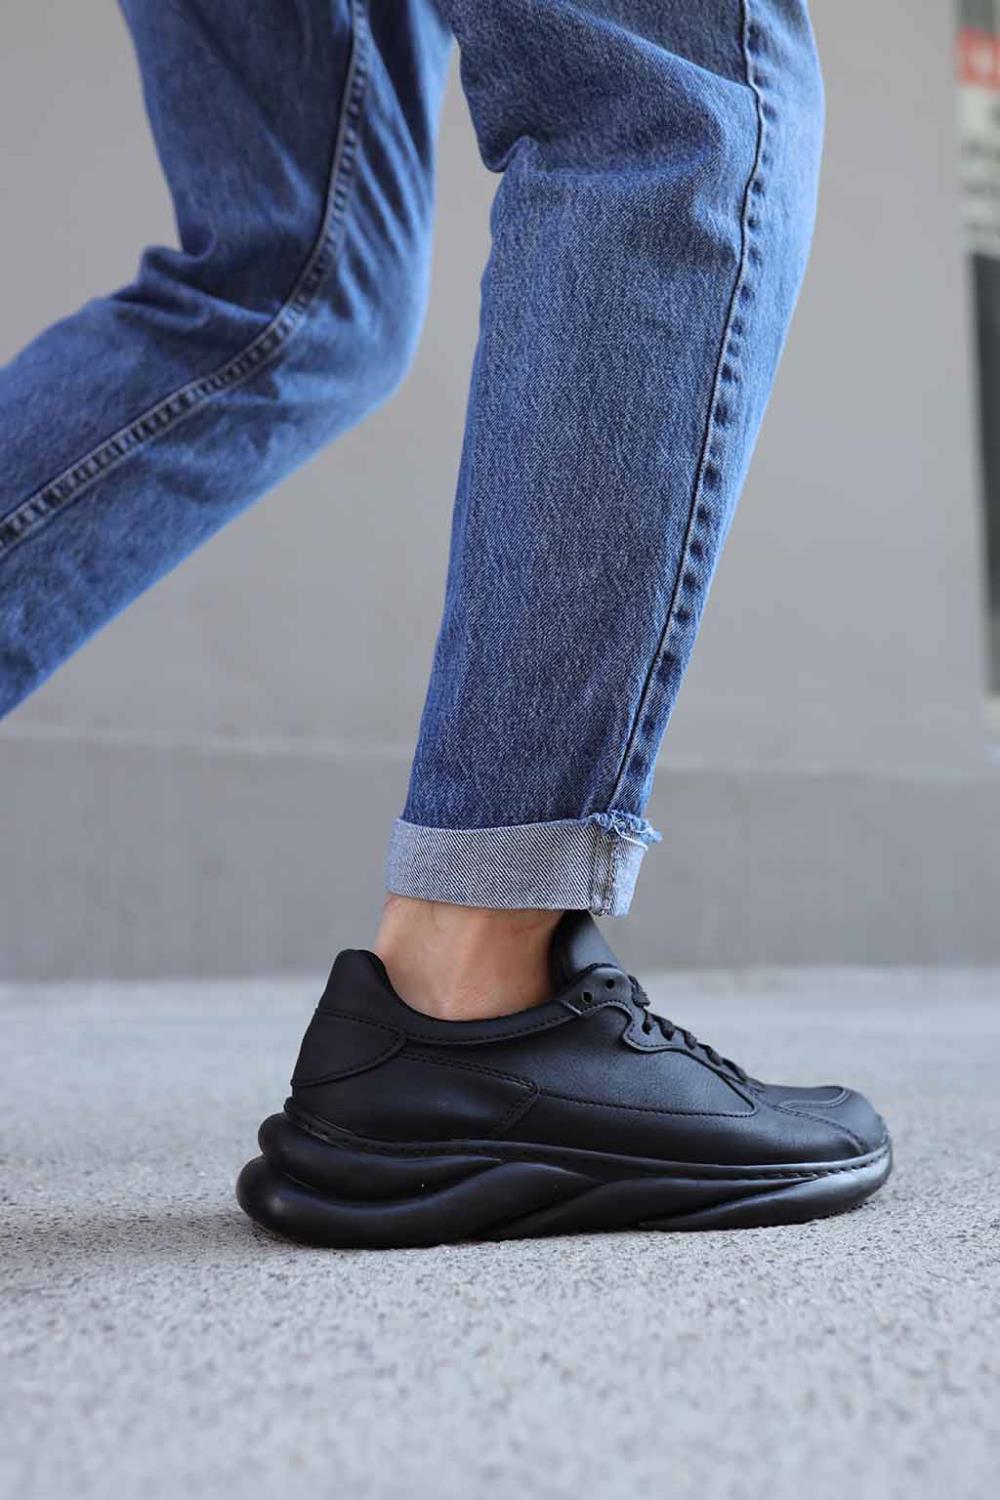 Knack Sneakers Ayakkabı 065 Siyah (Siyah Taban) m9532